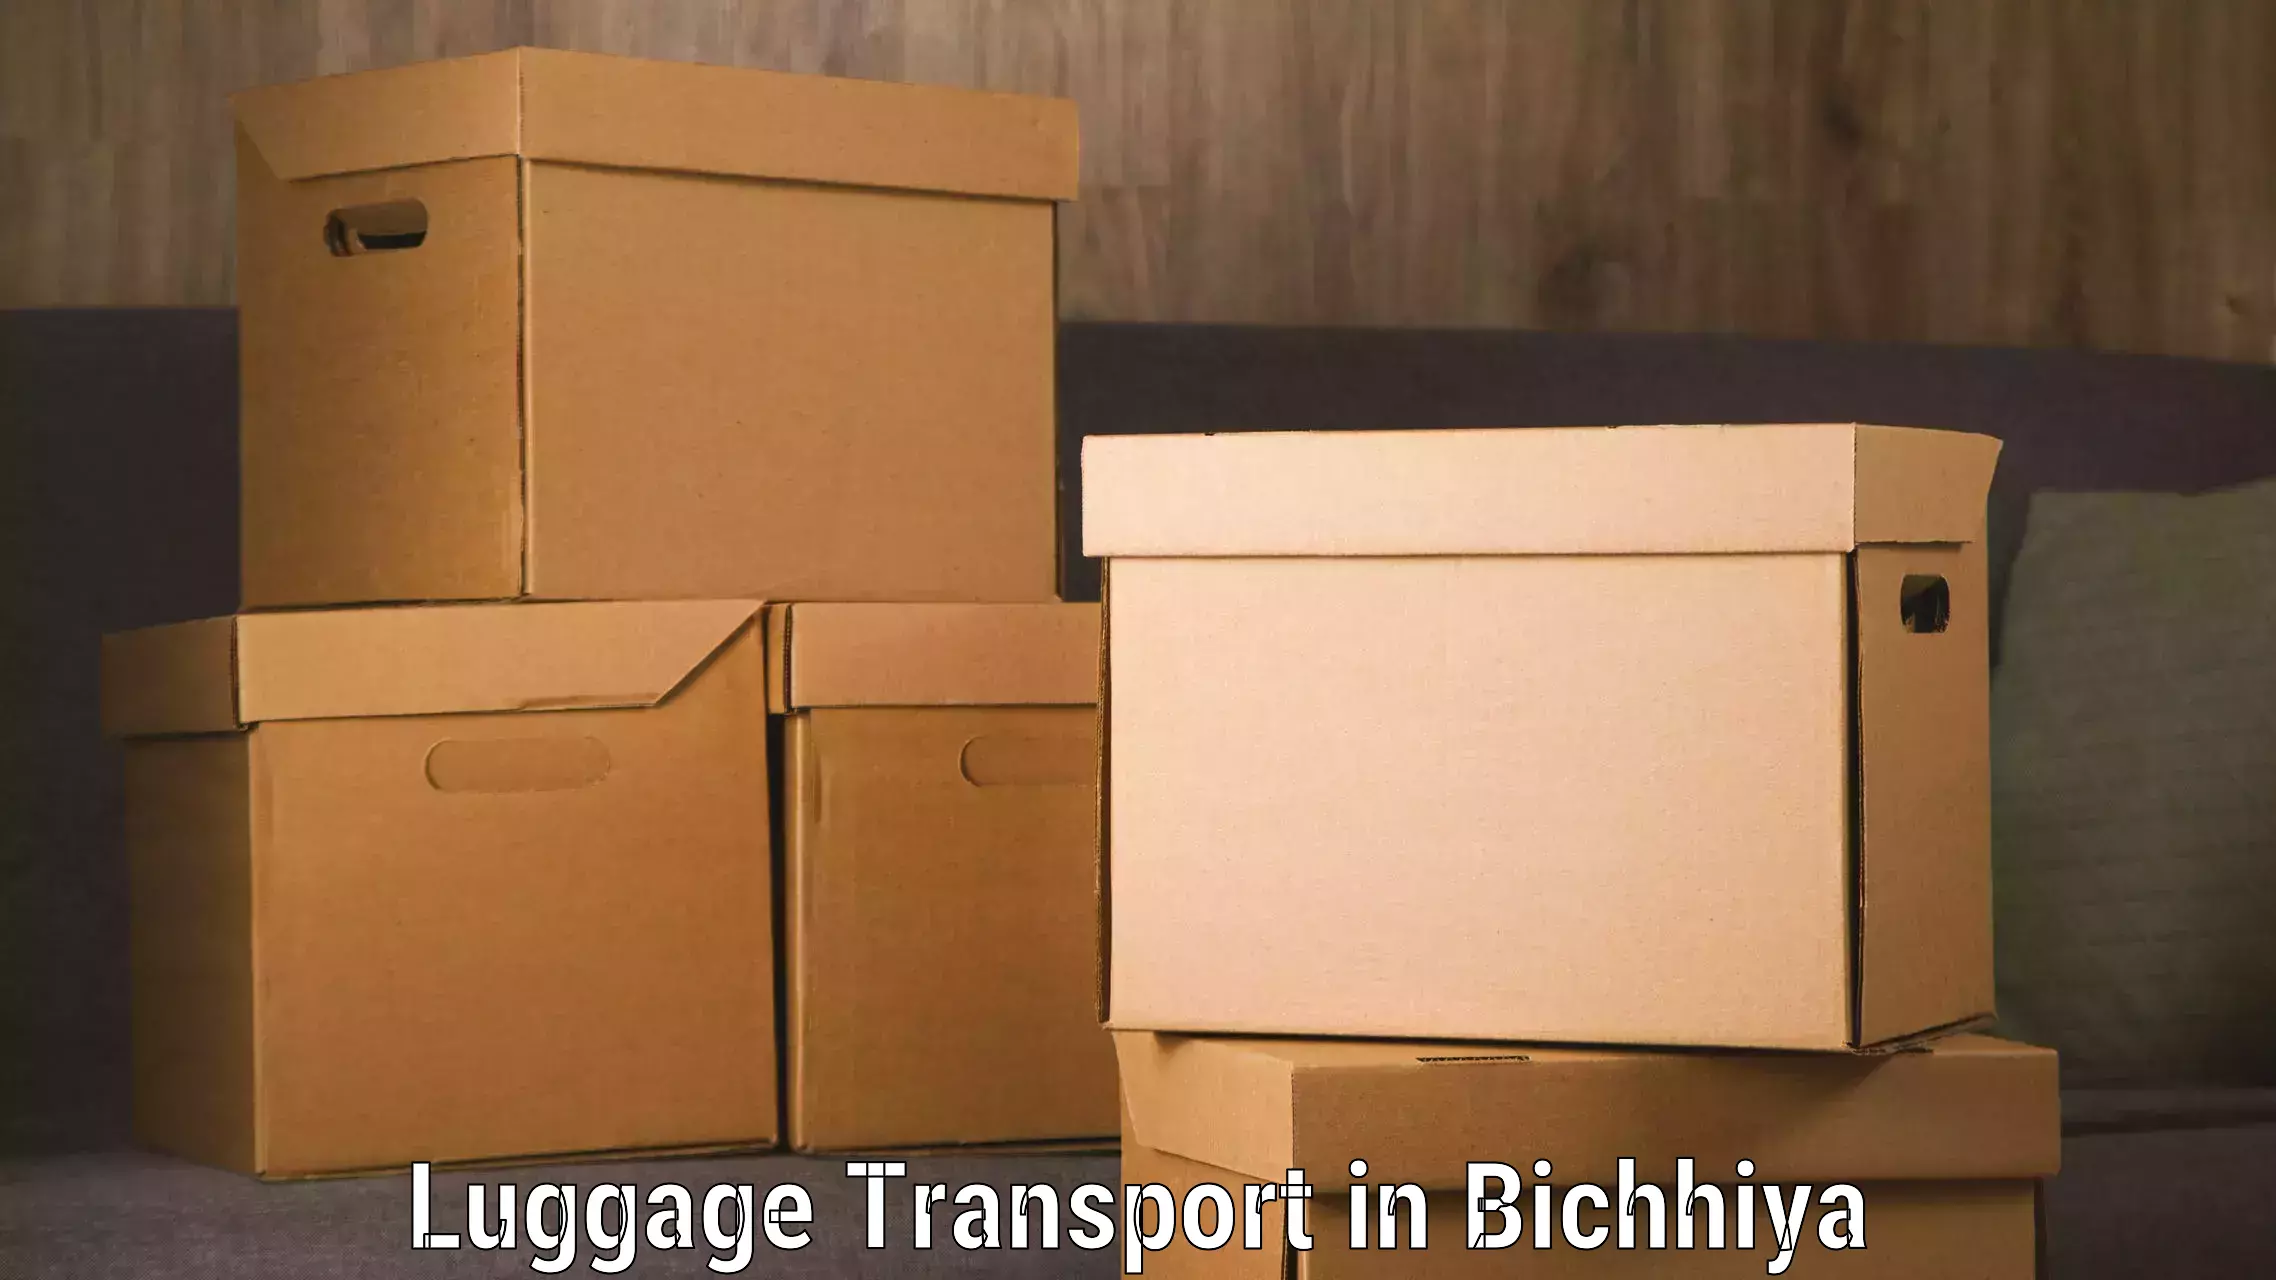 Baggage transport innovation in Bichhiya